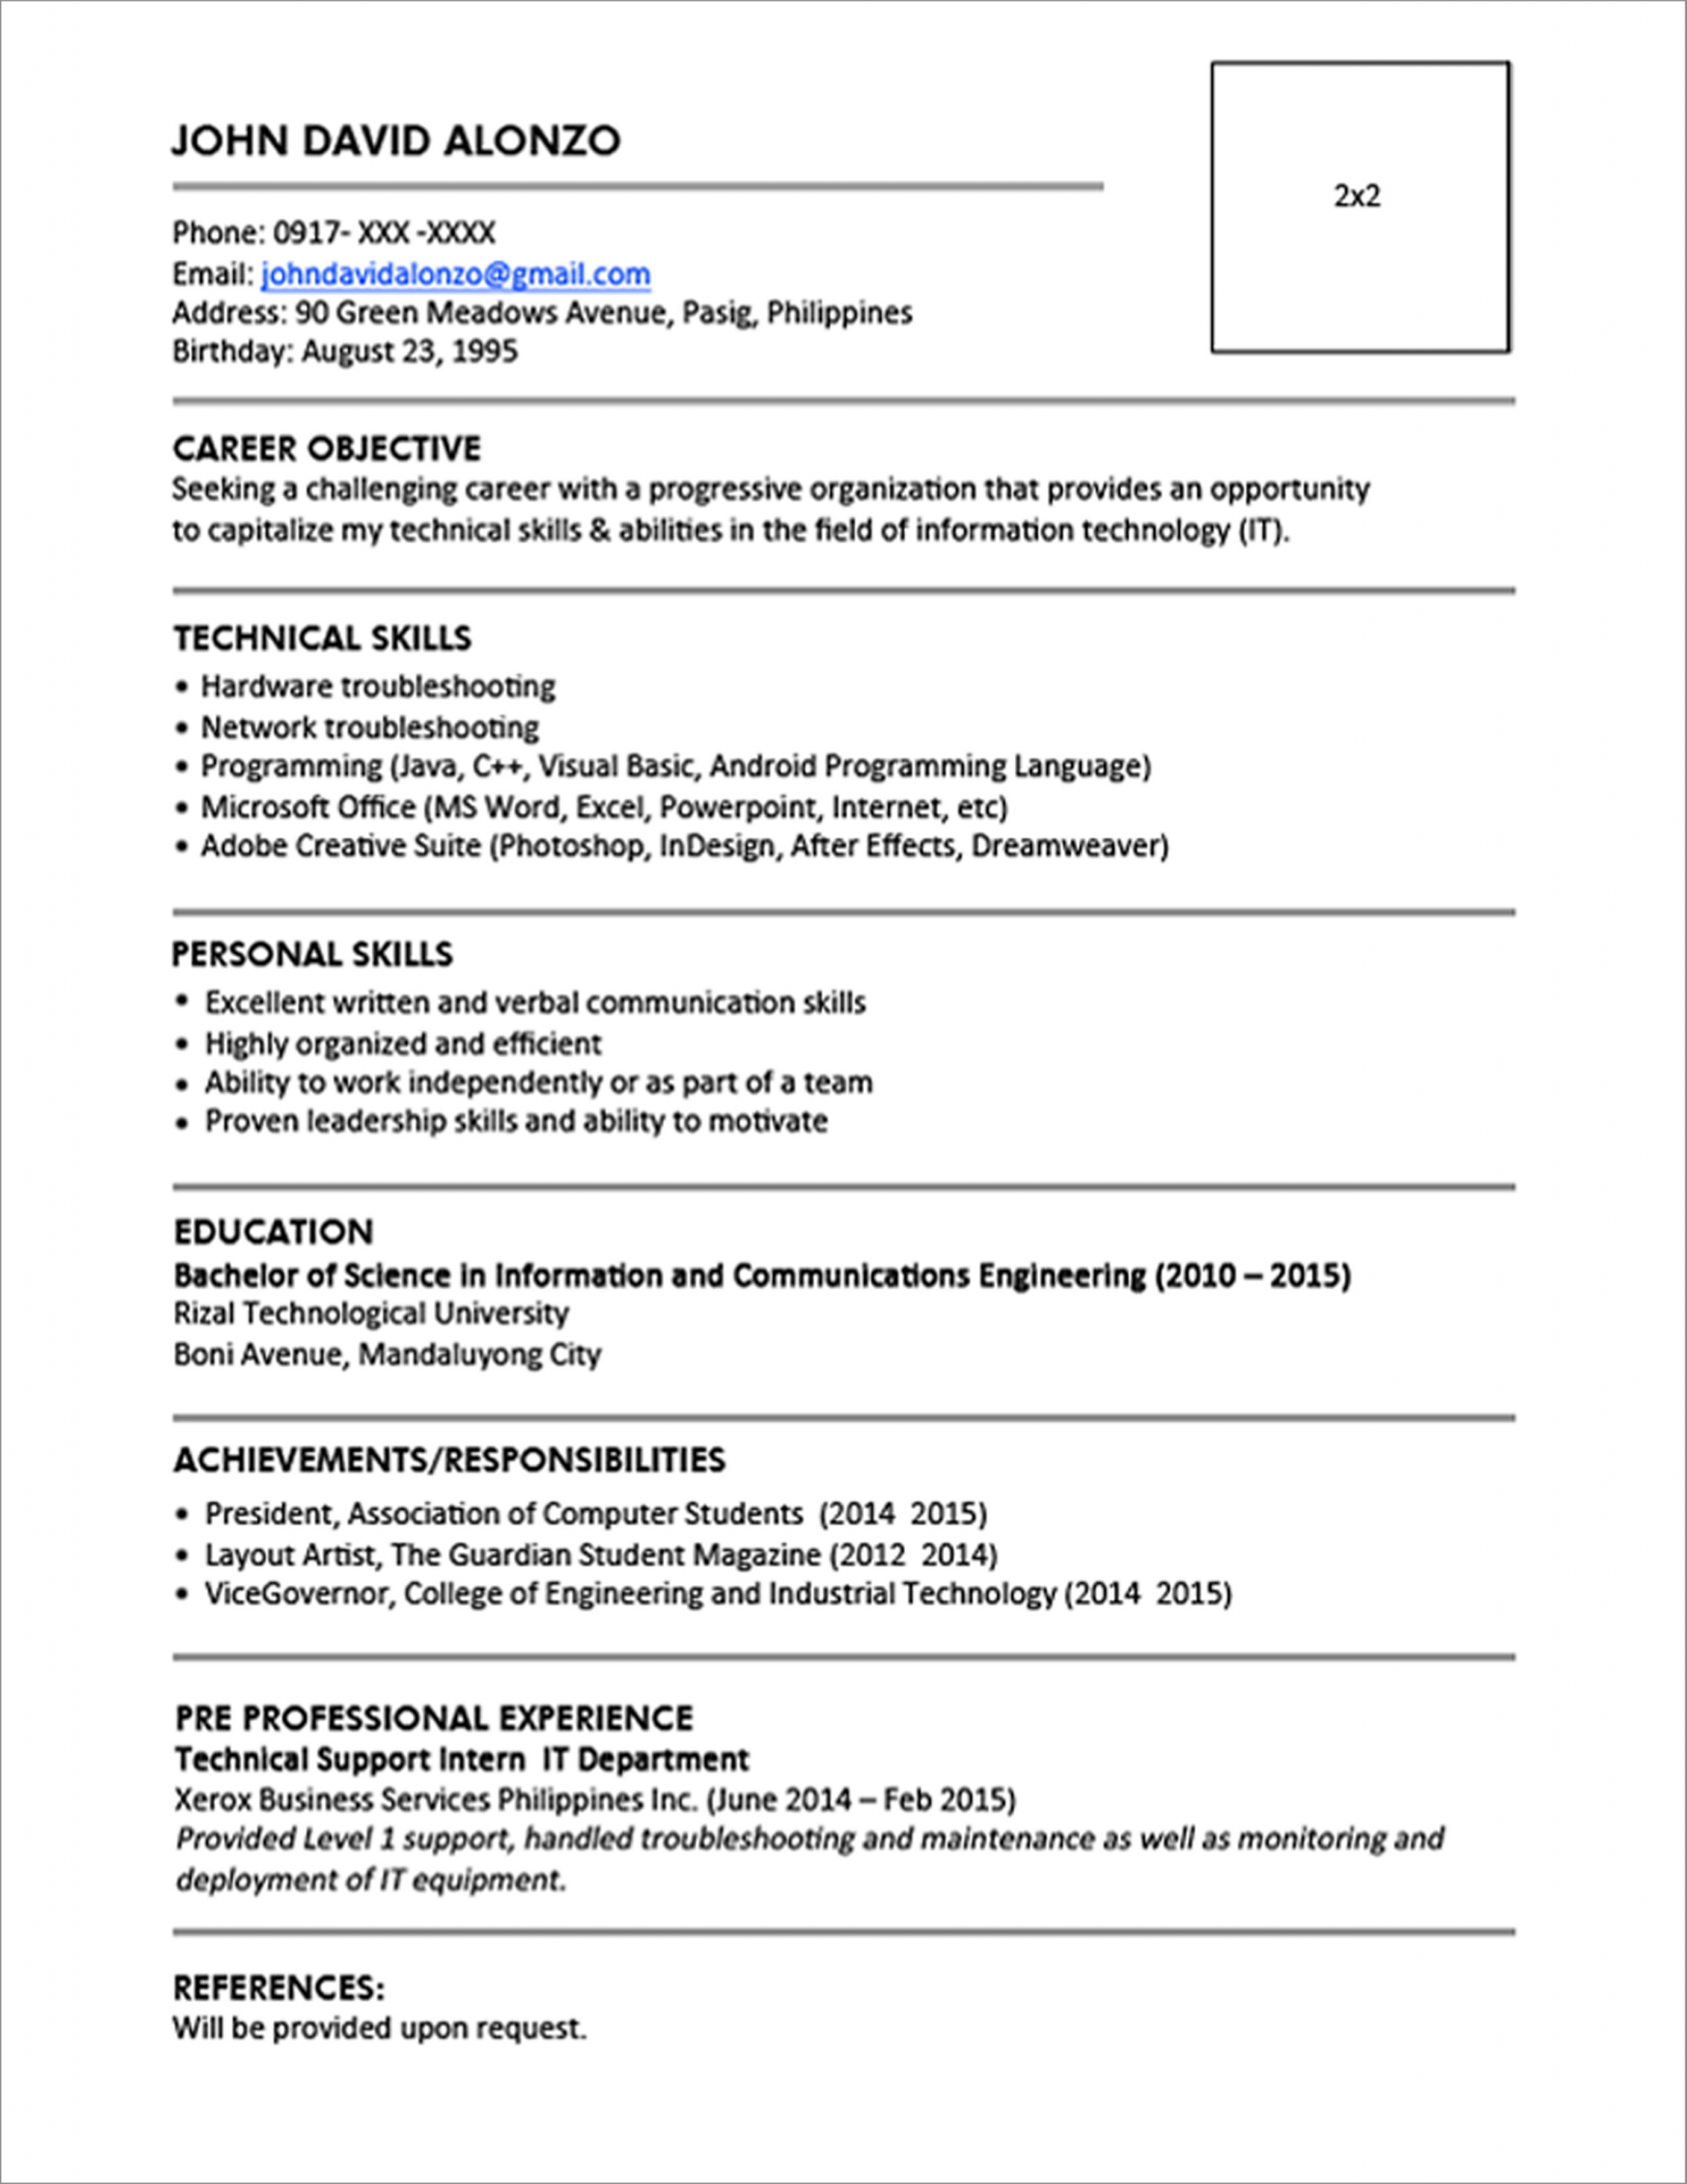 Simple Sample Resume for Fresh Graduate Sample Resume format for Fresh Graduates E Page format